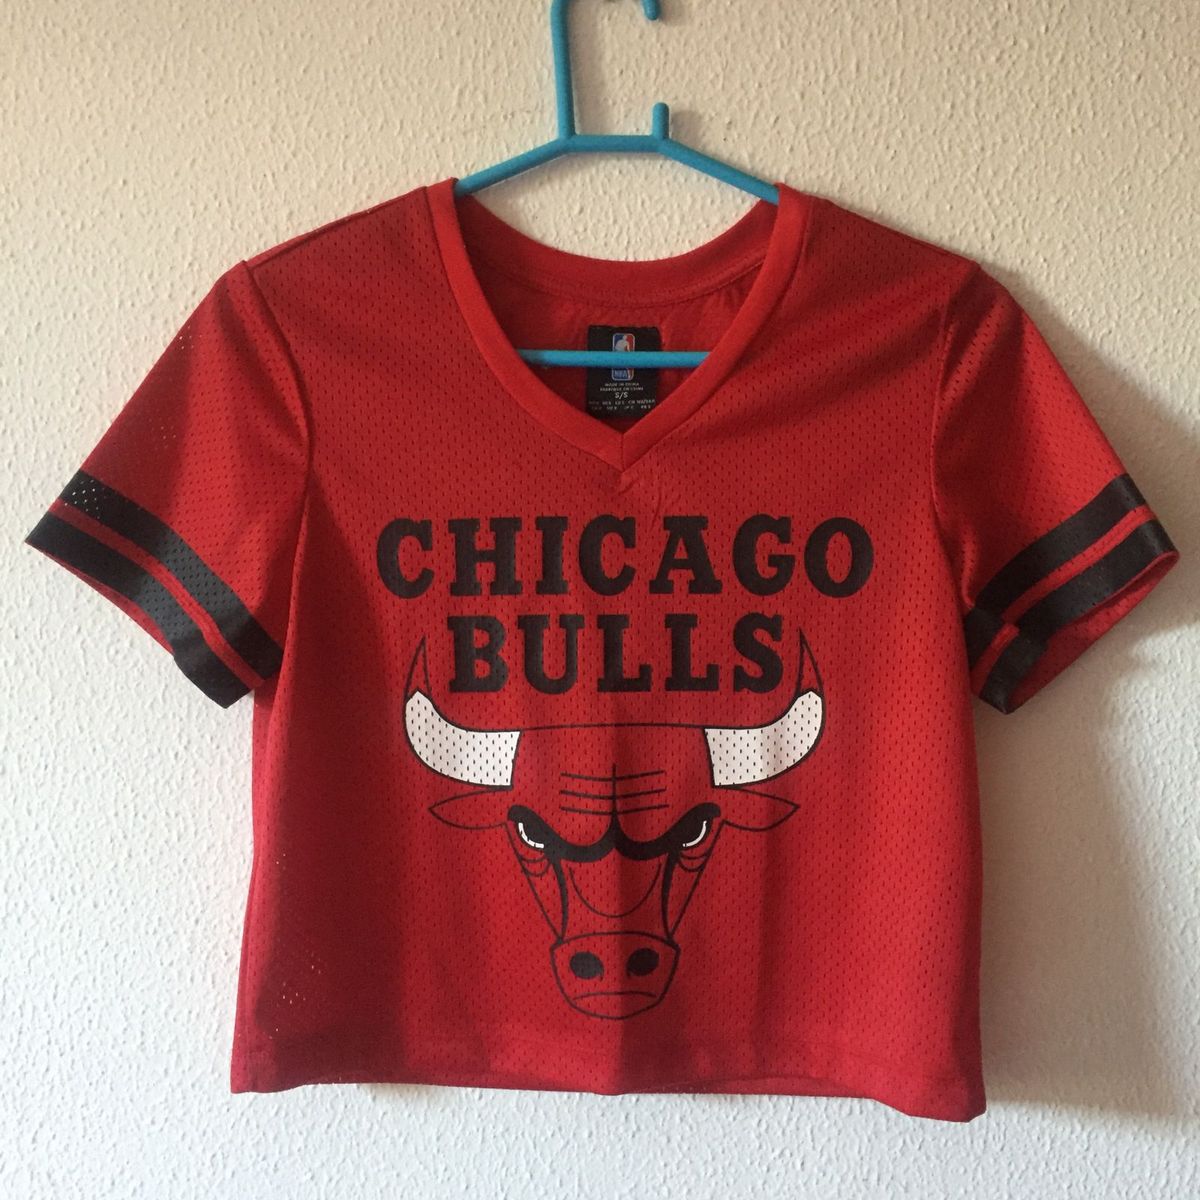 camisa chicago bulls feminina